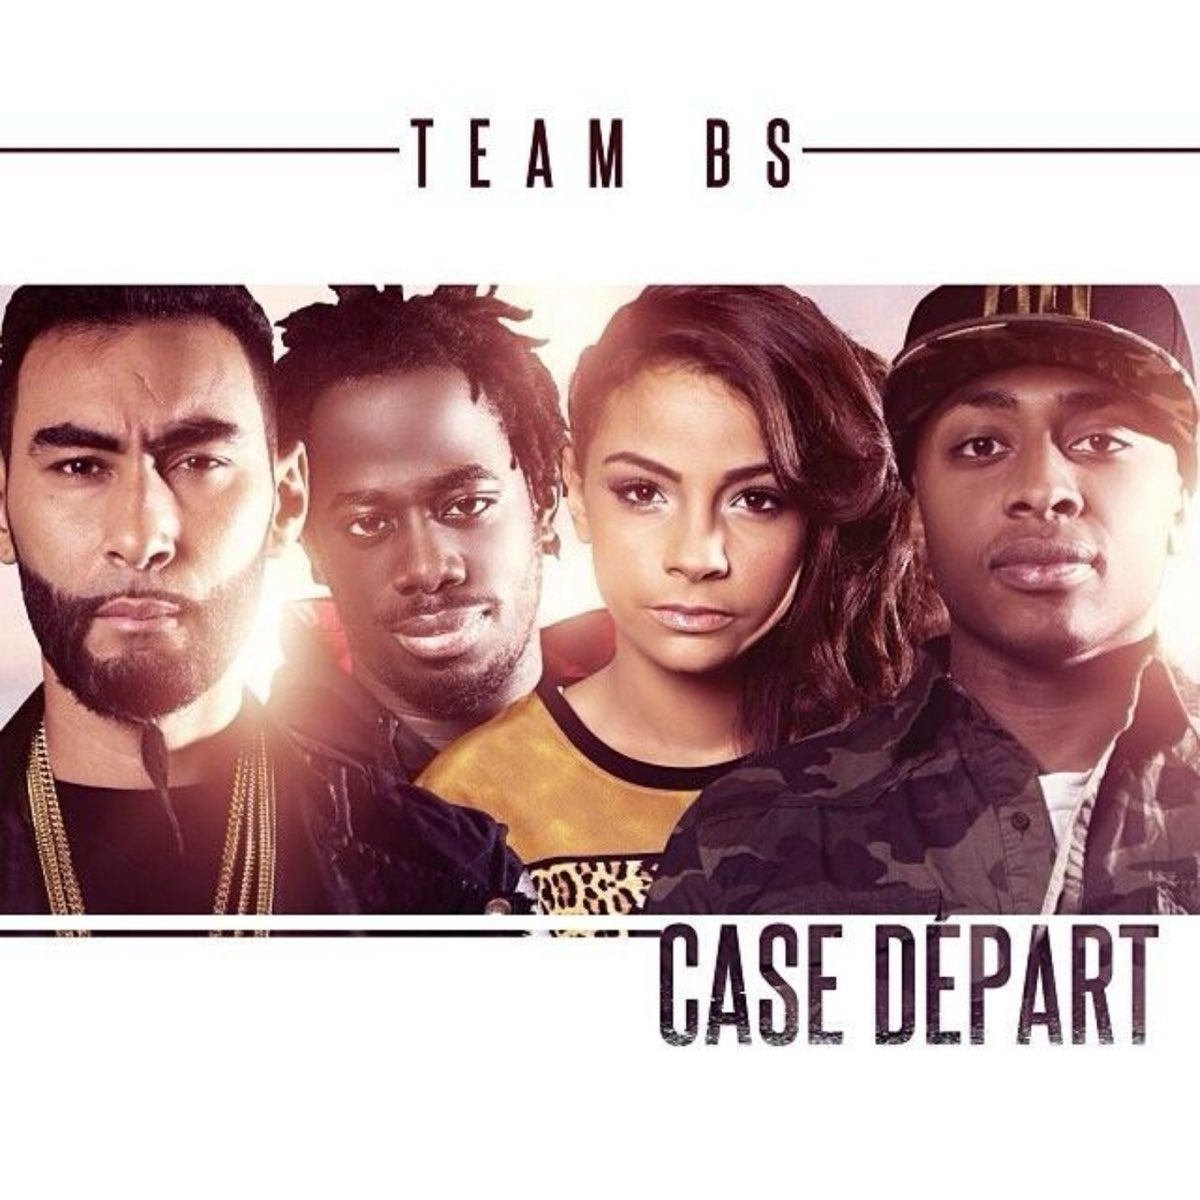 Team BS Case Depart cover artwork